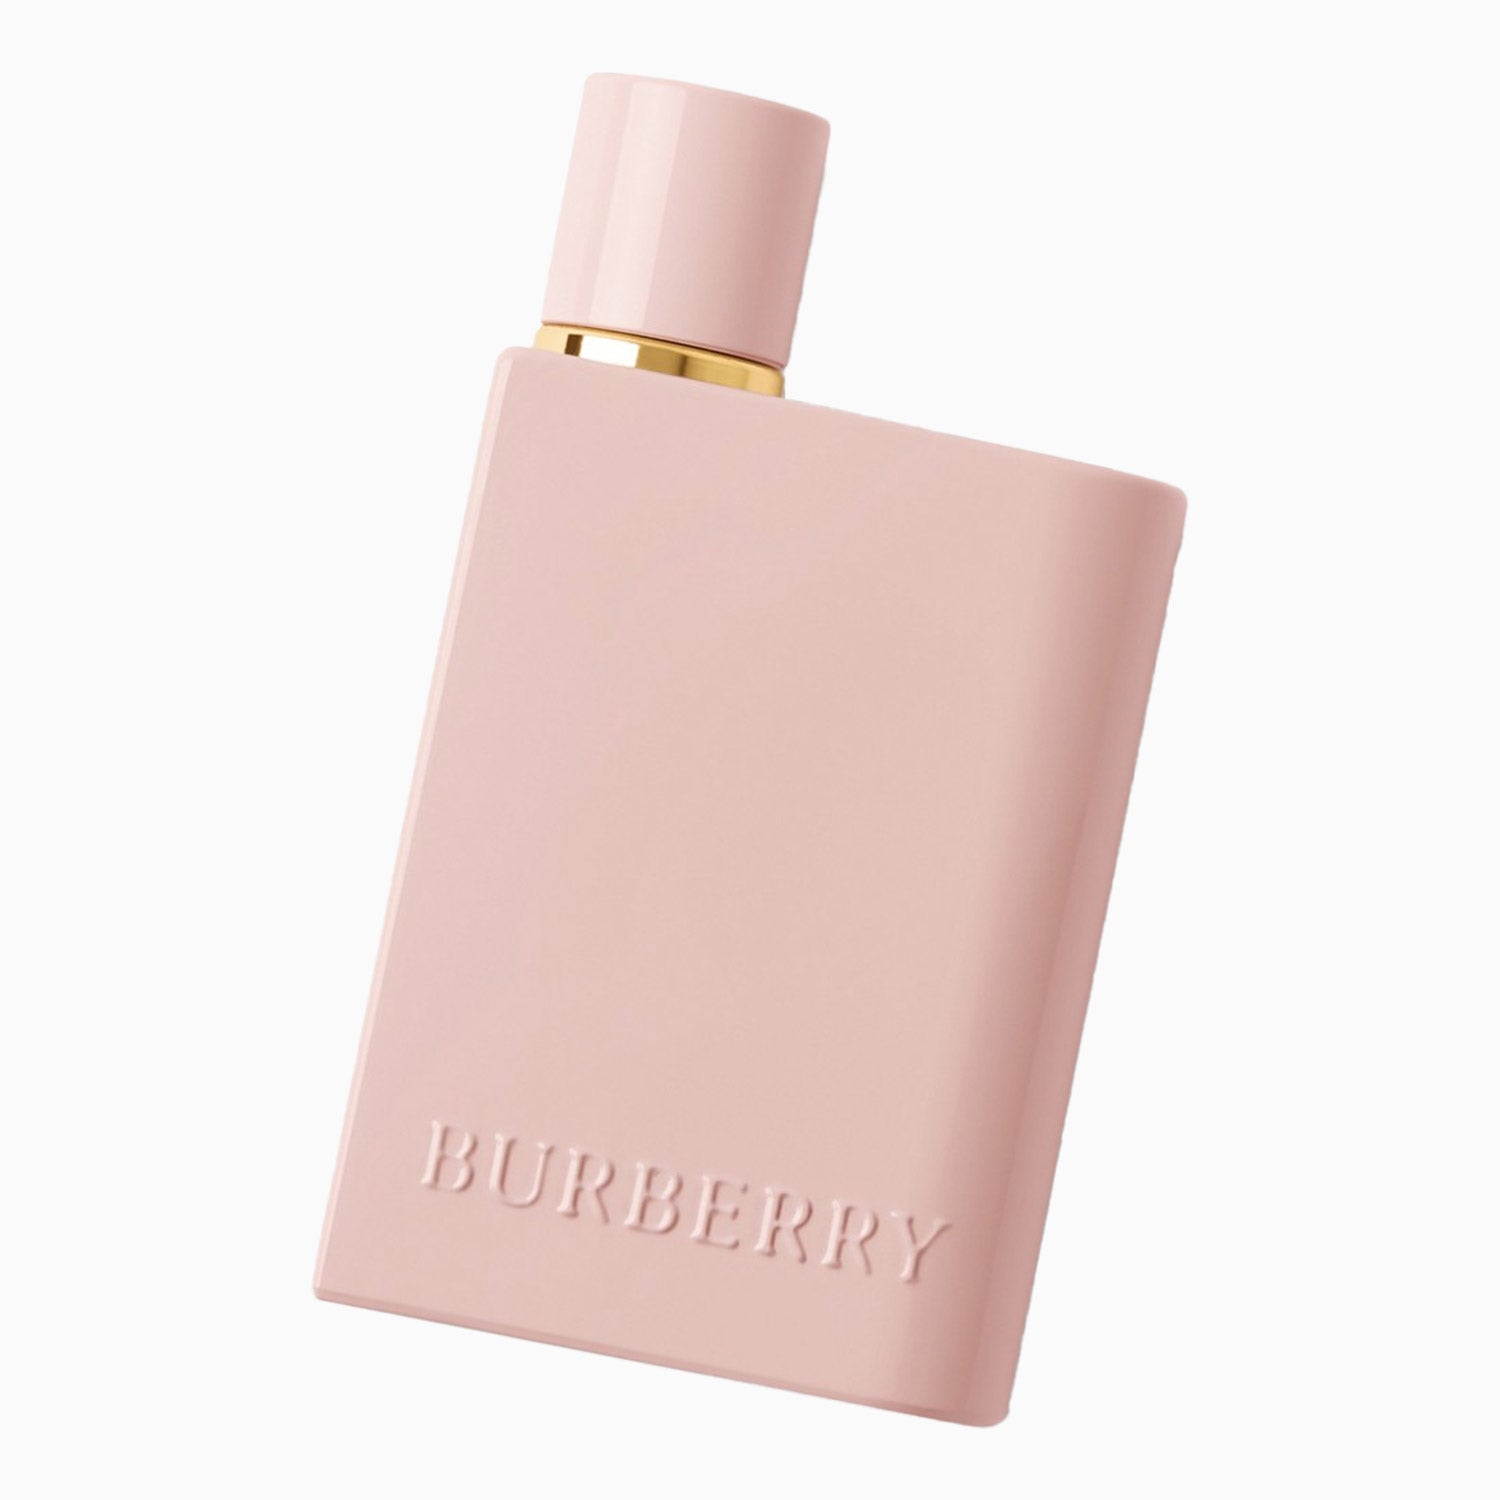 burberry-womens-burberry-her-elixir-de-parfum-3-3-oz-3616304061943